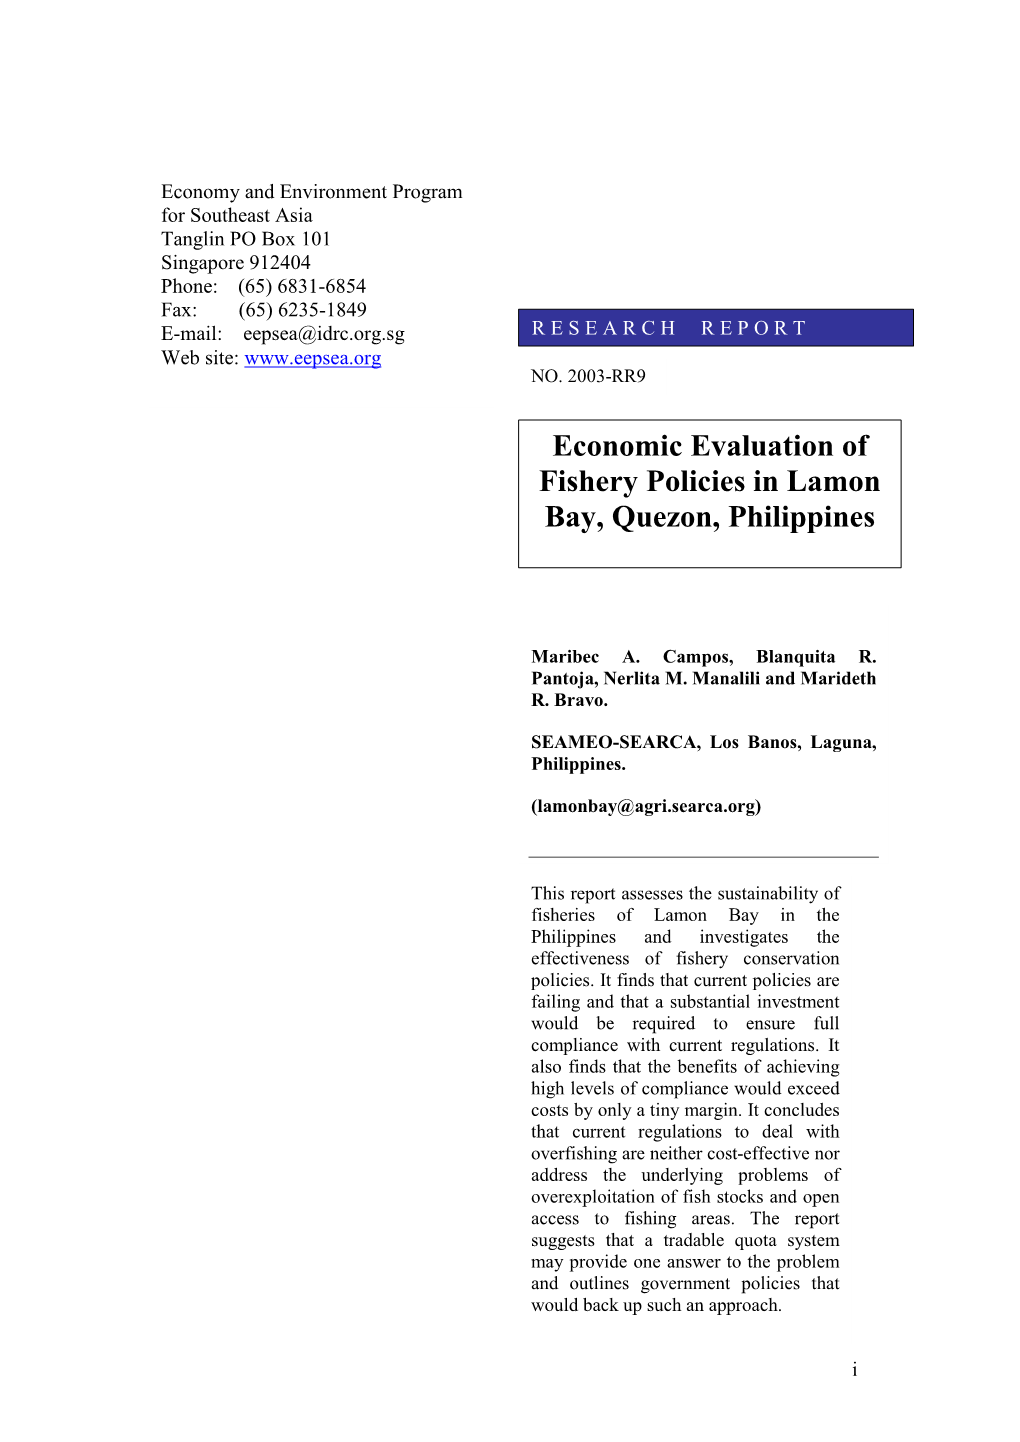 Economic Evaluation of Fishery Policies in Lamon Bay, Quezon, Philippines